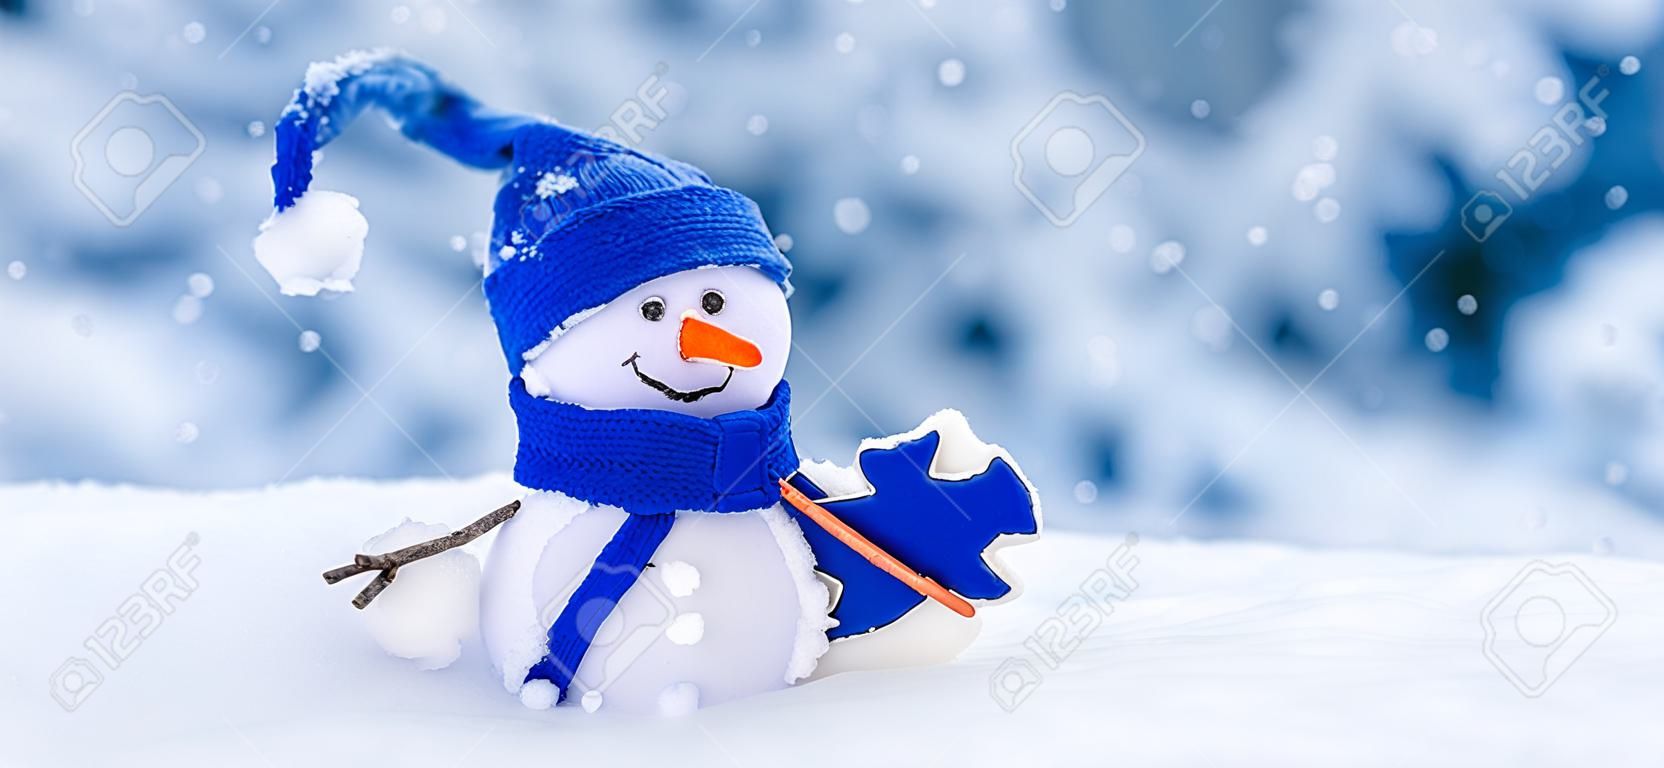 Little handmade snowman on the white snow on blue background.